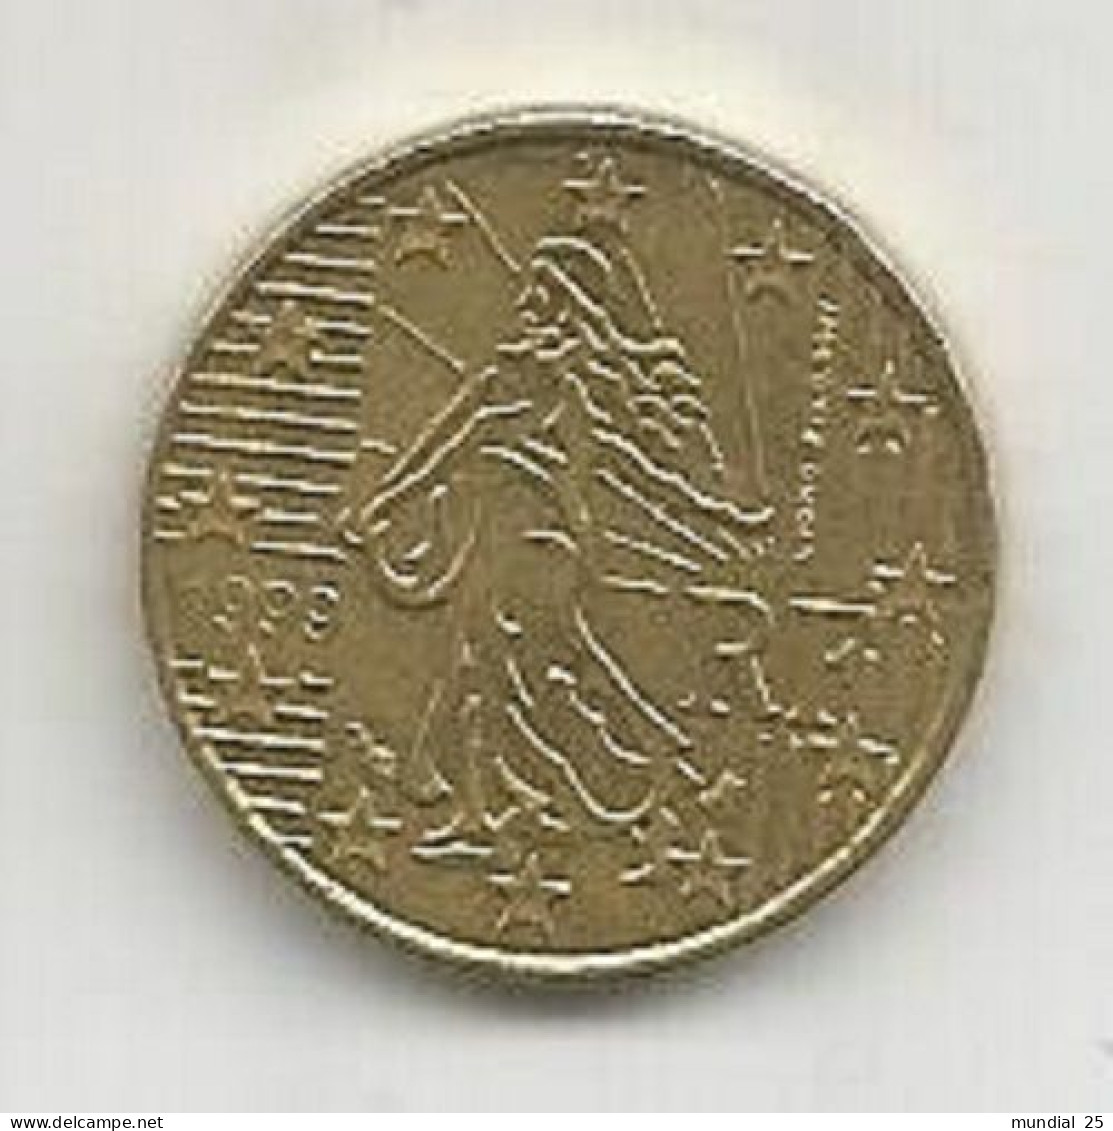 FRANCE 10 EURO CENT 1999 - Frankreich